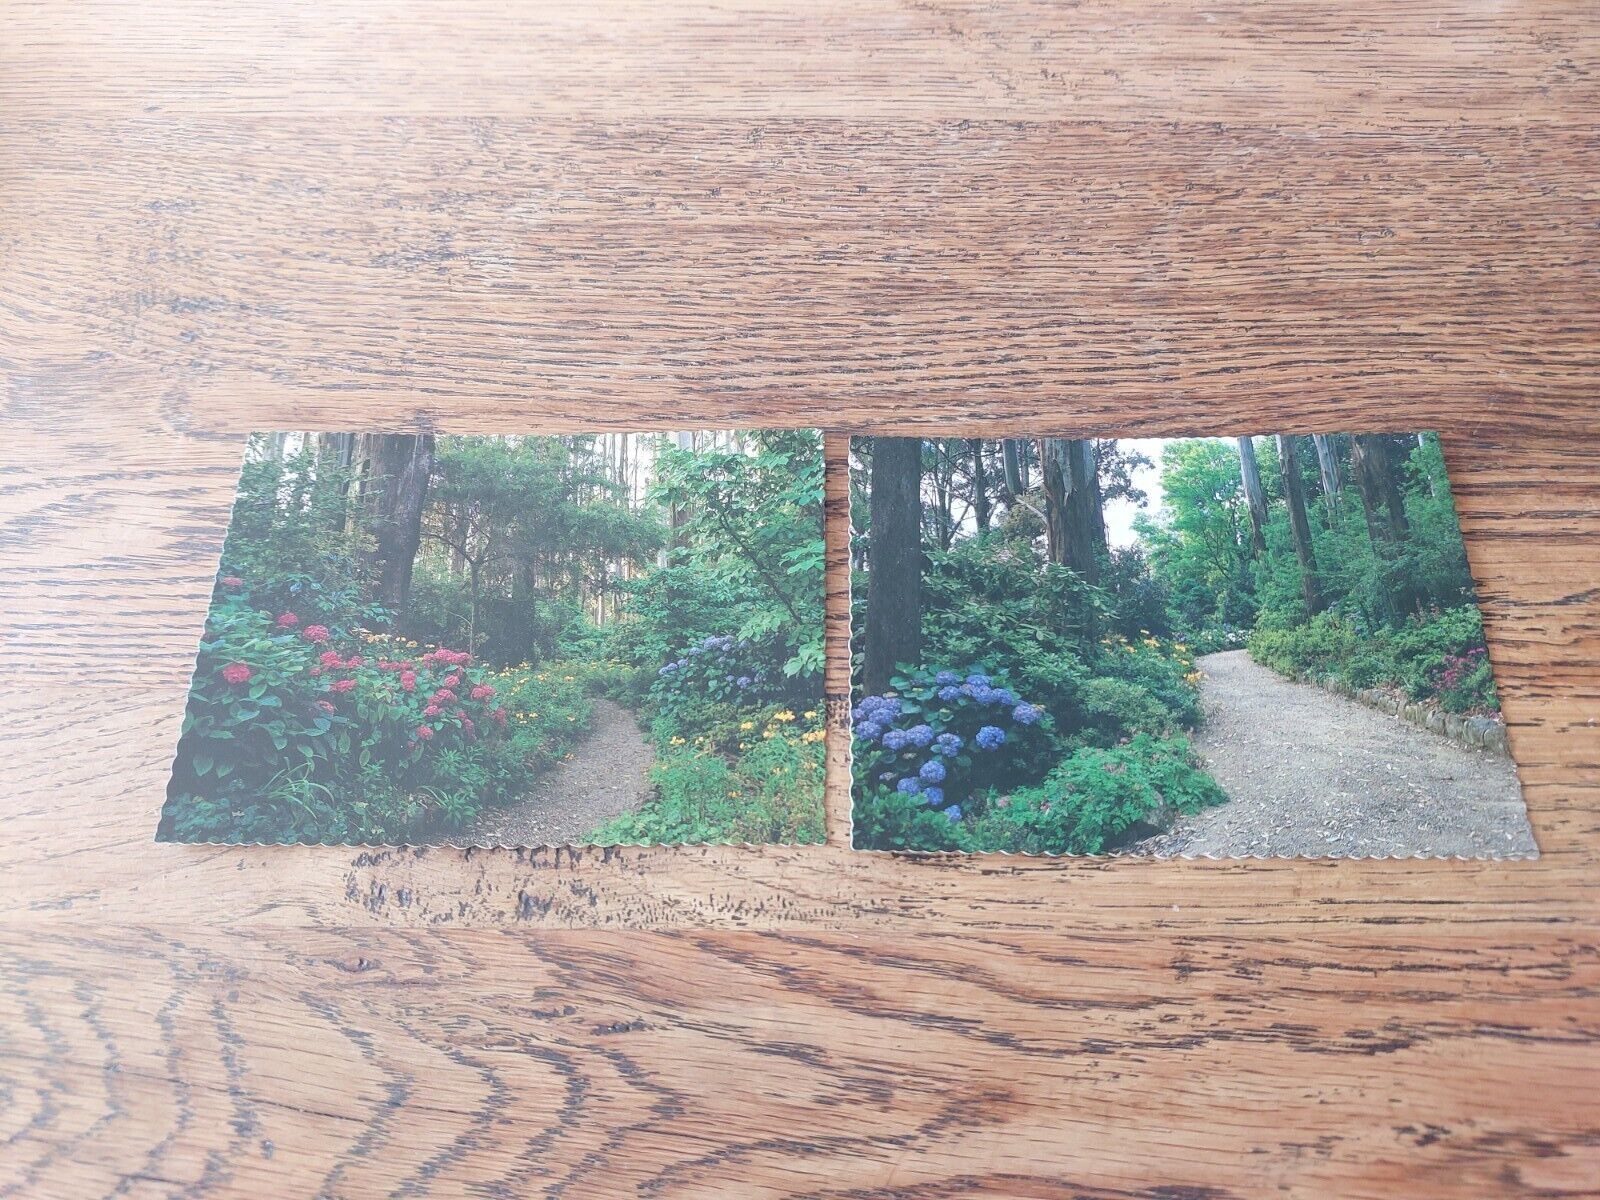 George Tindale Memorial Gardens, Sherbrooke VIC 2 Vintage Photo Postcards 